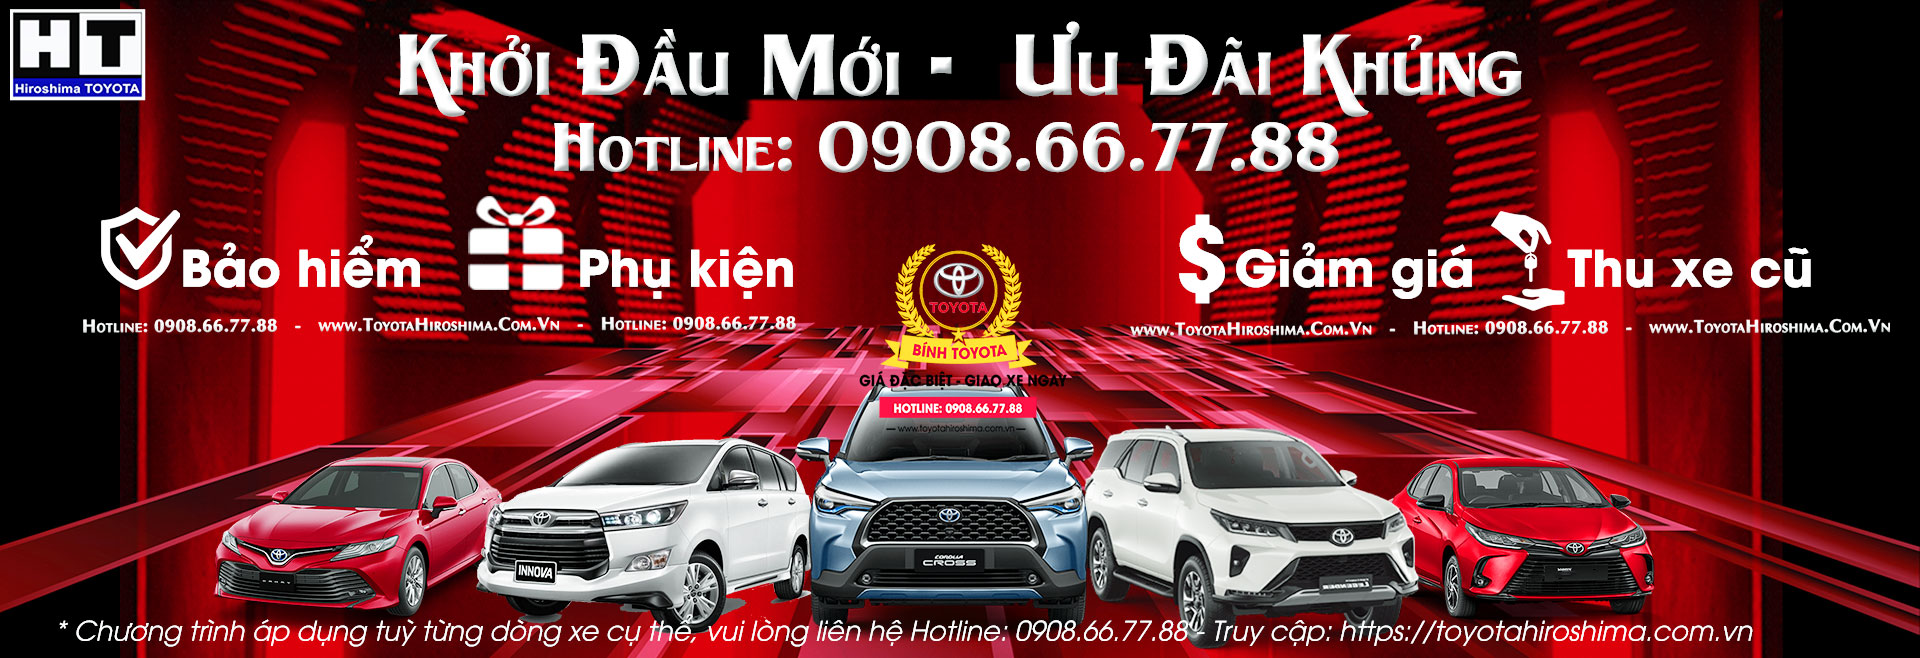 ToyotaHiroshimaTanCang-0908667788-Tin-Tuc-Kuyen-ma-khoi-dau-moi-uu-dai-khungng